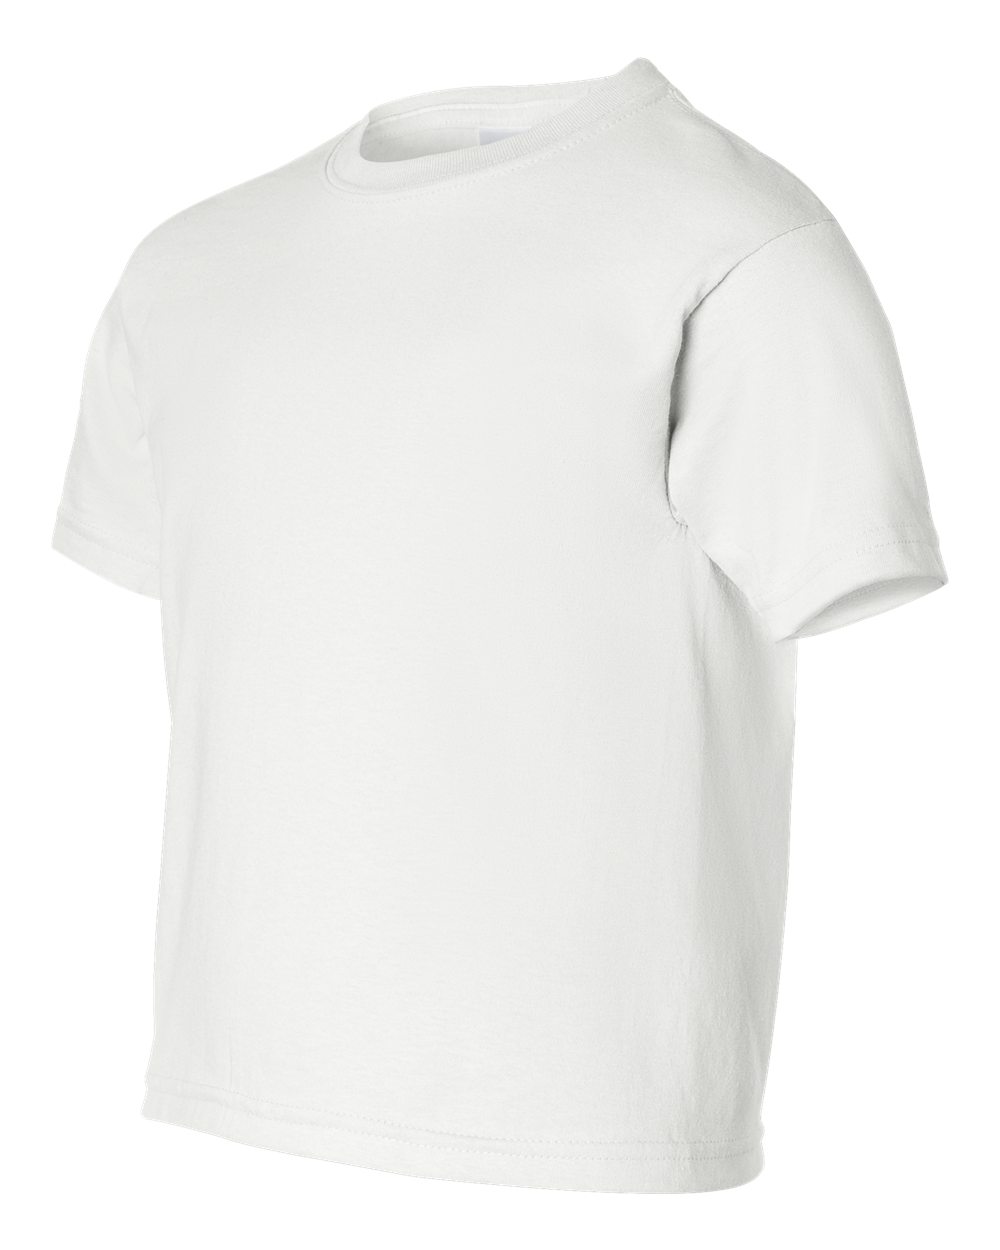 Gildan Ultra Cotton Youth Boys Girls Classic Fit Plain Blank Basic T-Shirt 2000B 